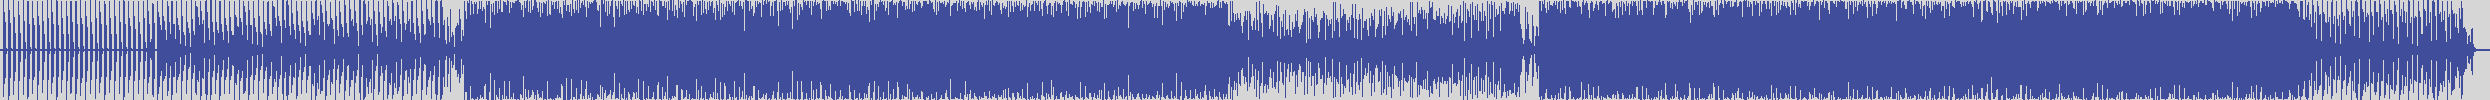 nf_boyz_records [NFY016] Ubaldo Ronald - Time to Tech [Extended] audio wave form